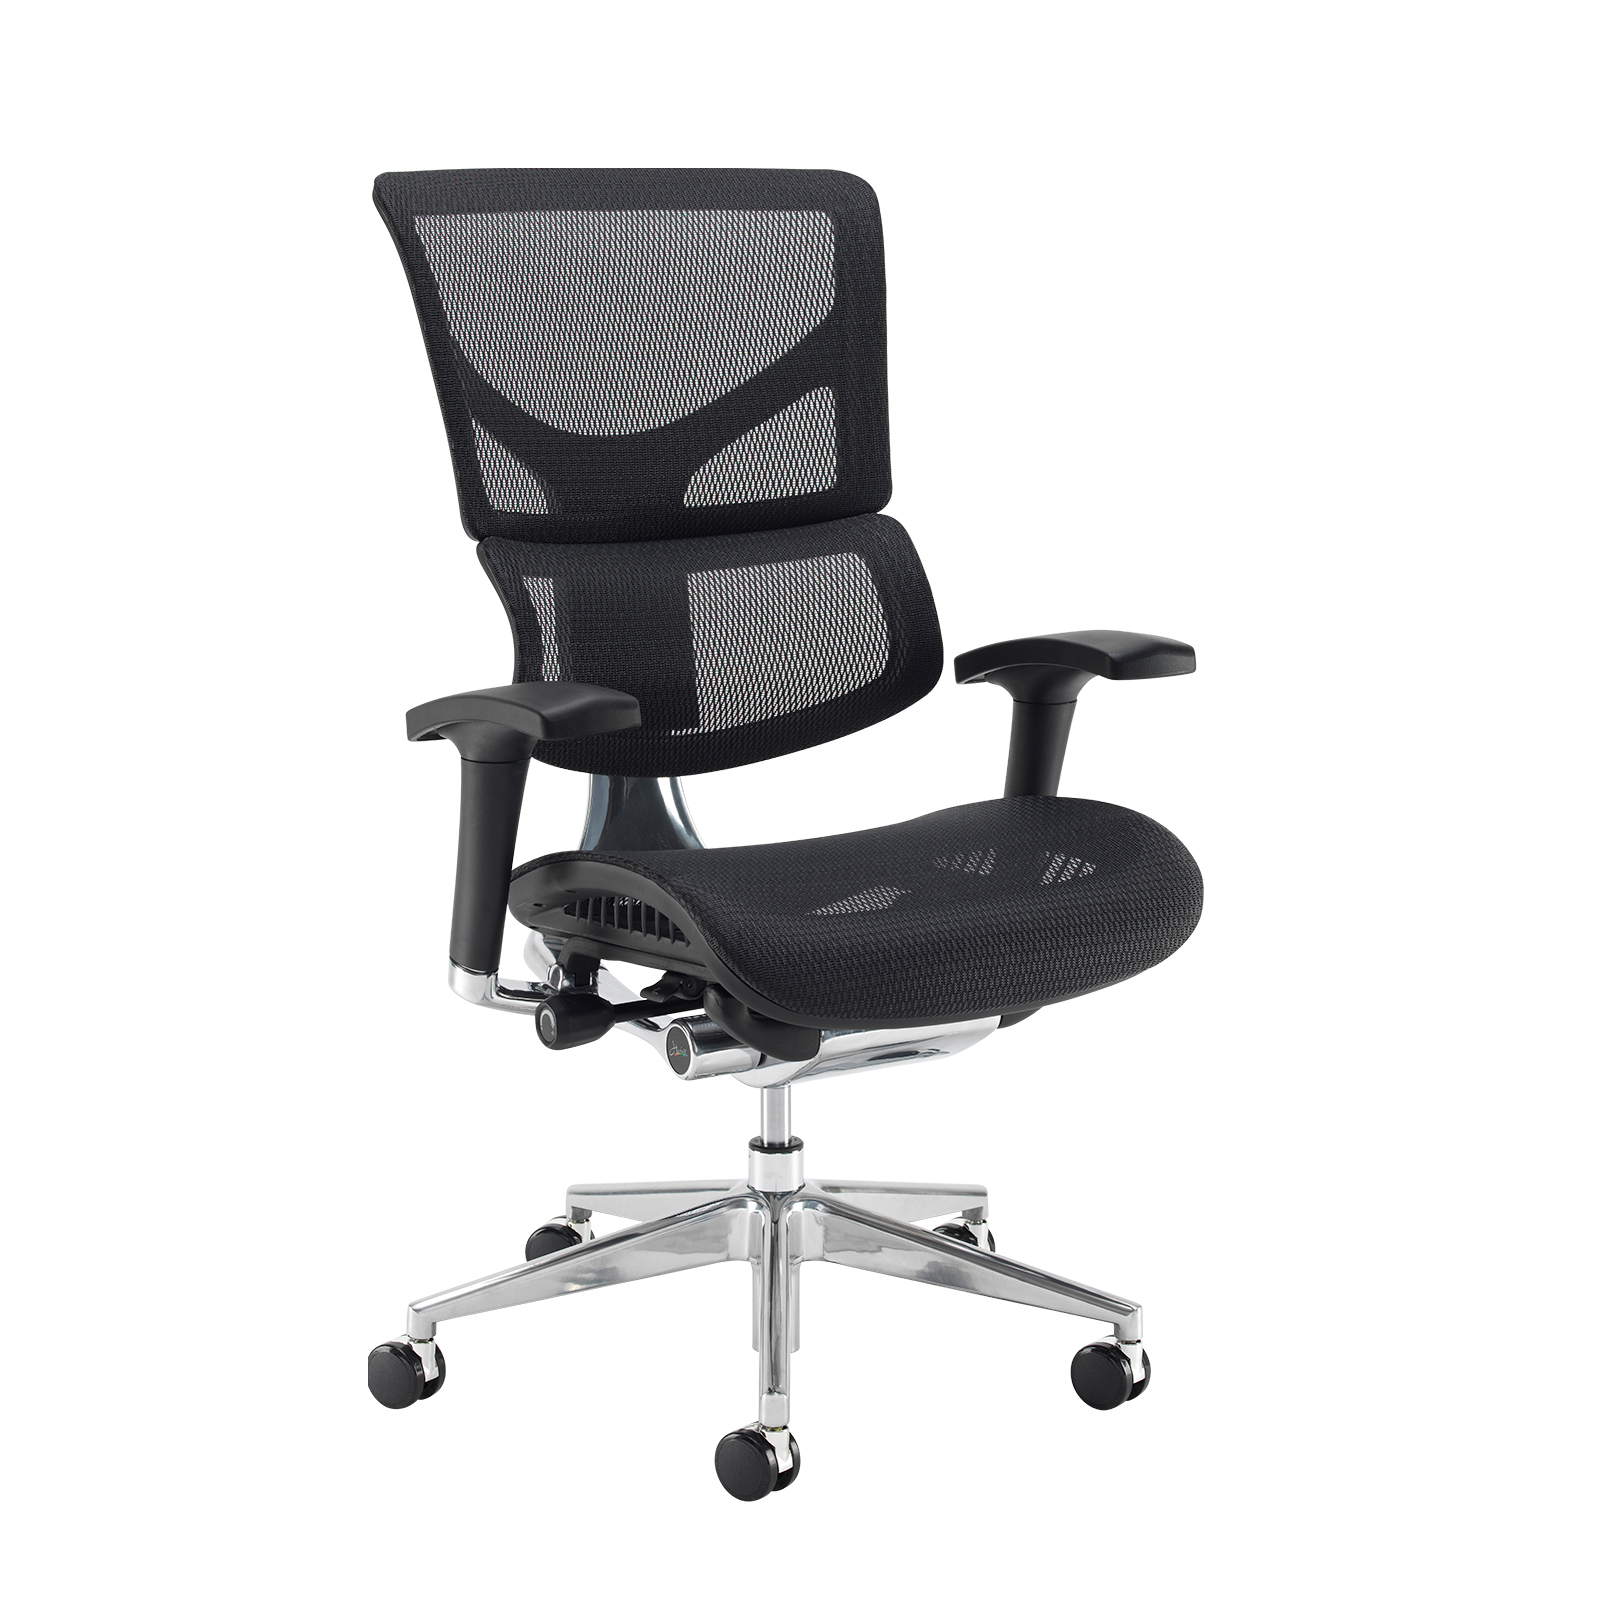 Dynamo Ergo mesh back posture chair with chrome base - black